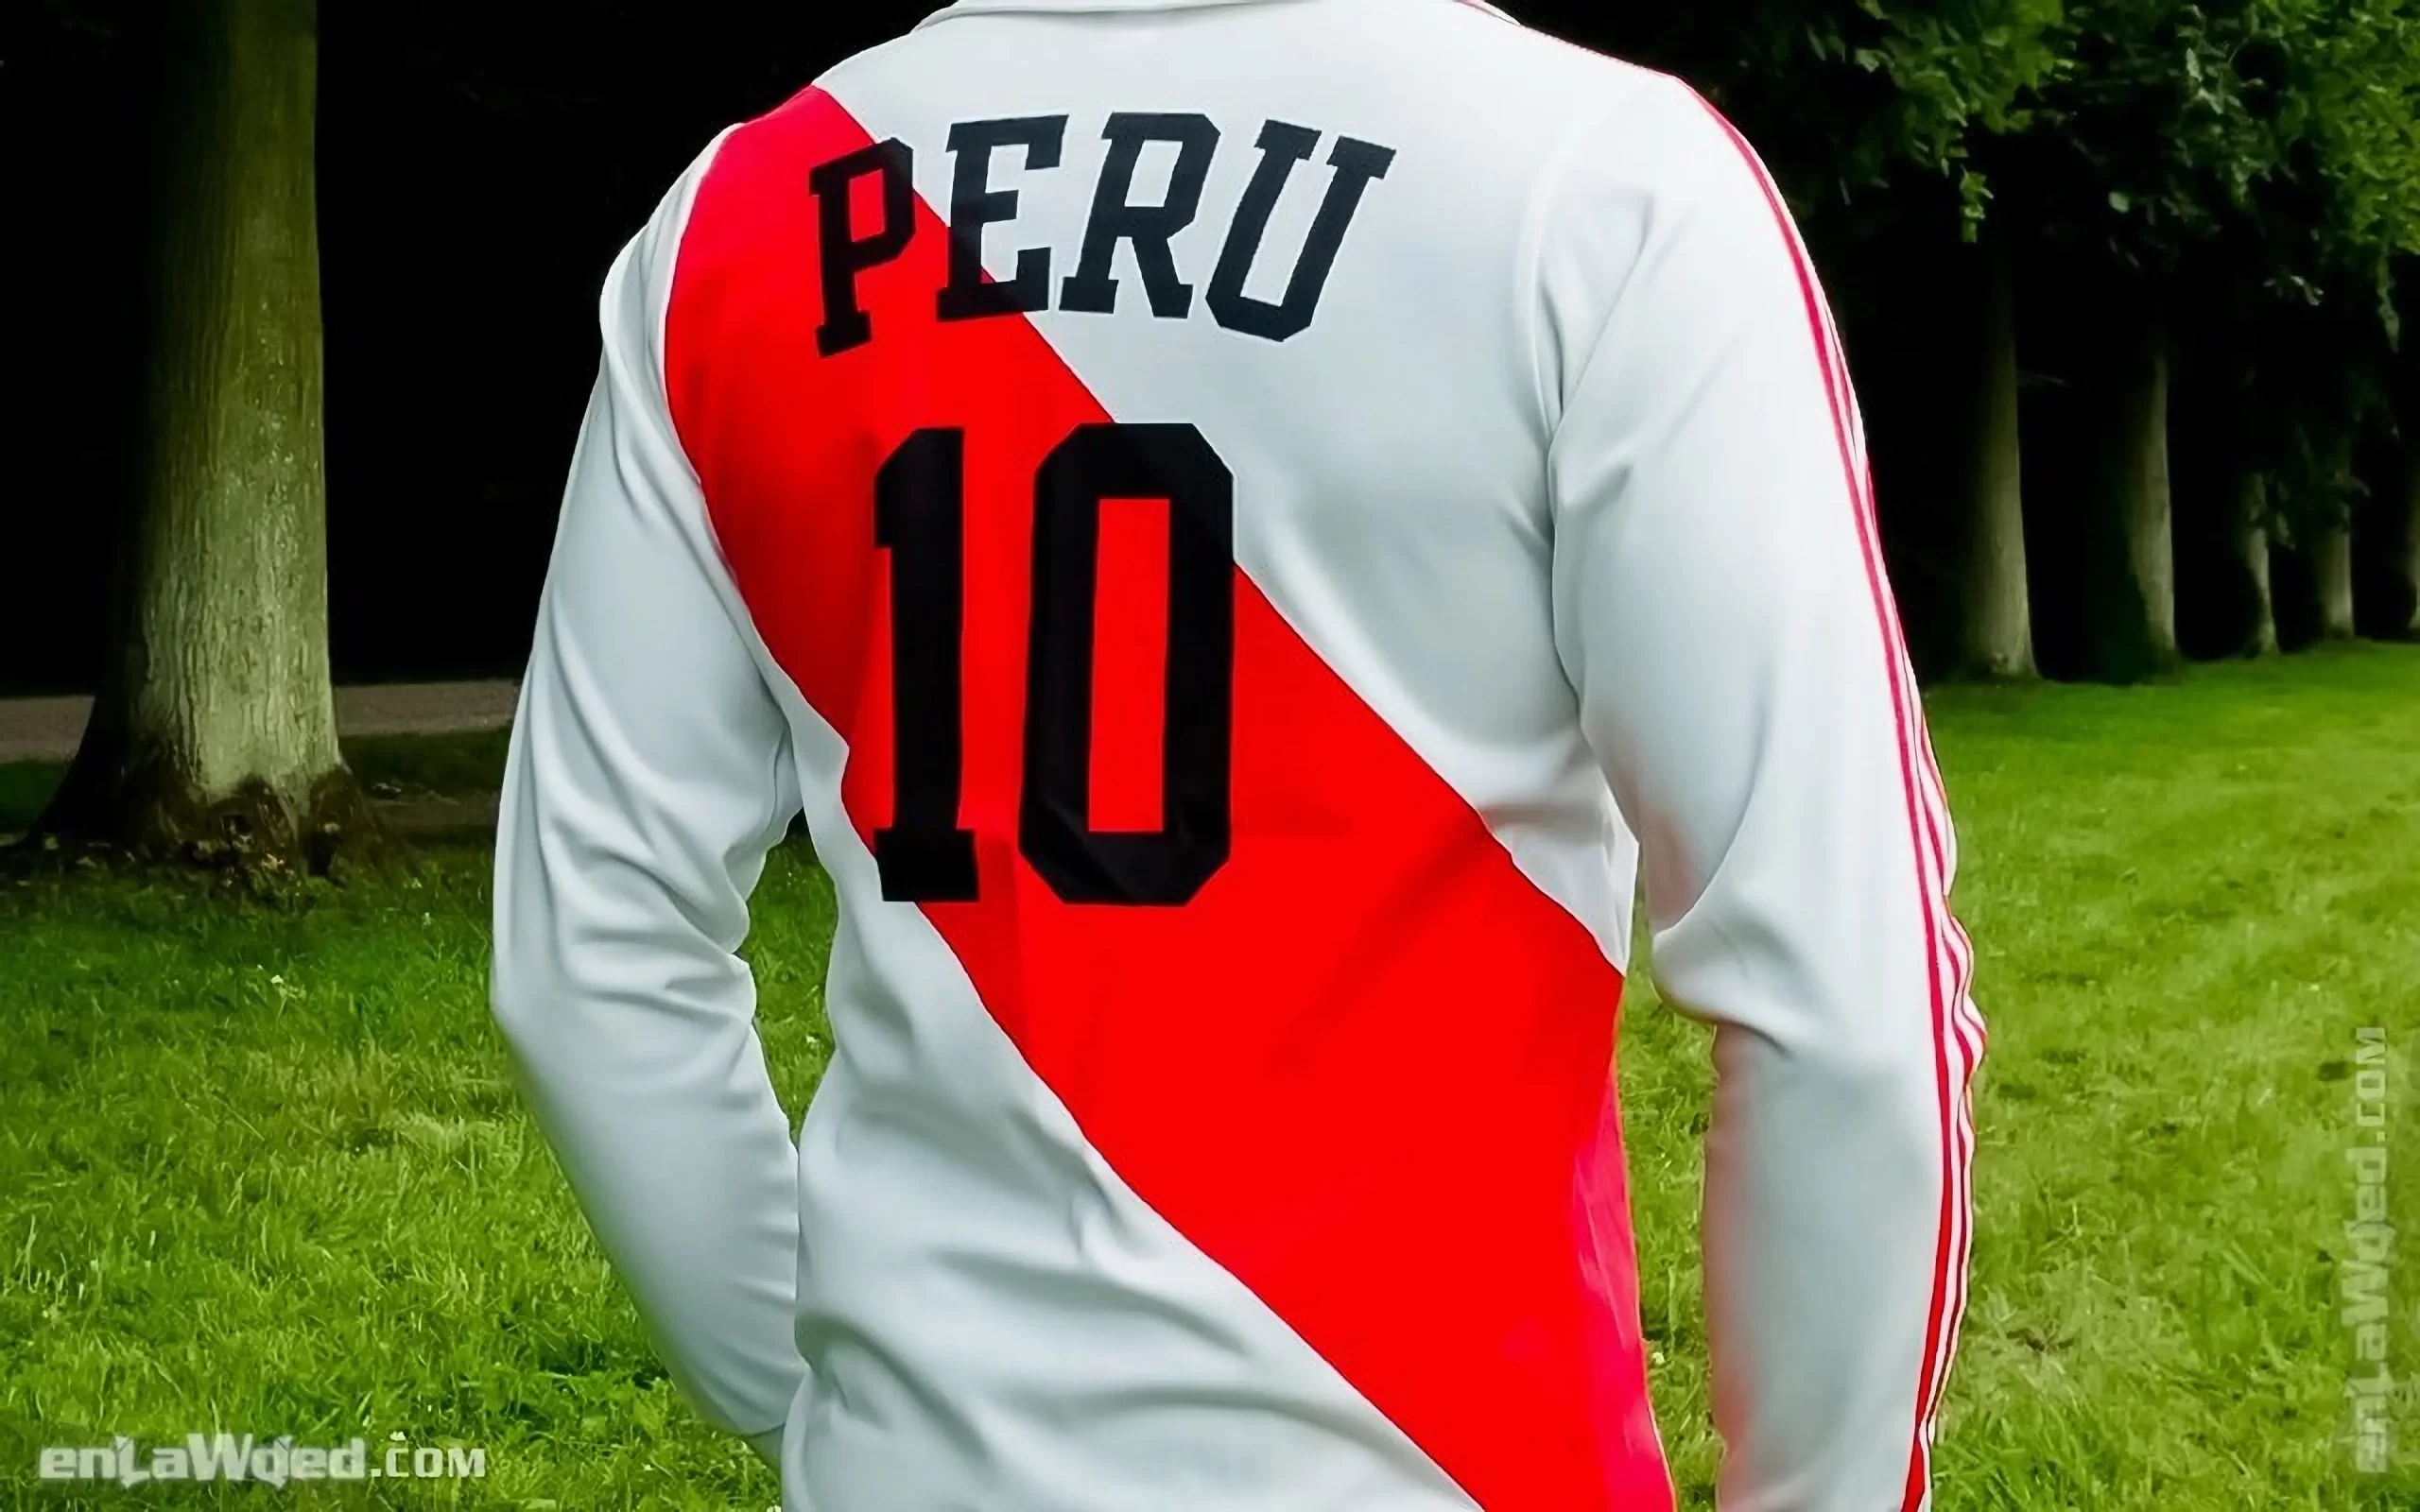 Men’s 2005 Peru ’78 Cubillas LS by Adidas Originals: Defiance (EnLawded.com file #lmc4lpxmpw5ab9hmhpq)